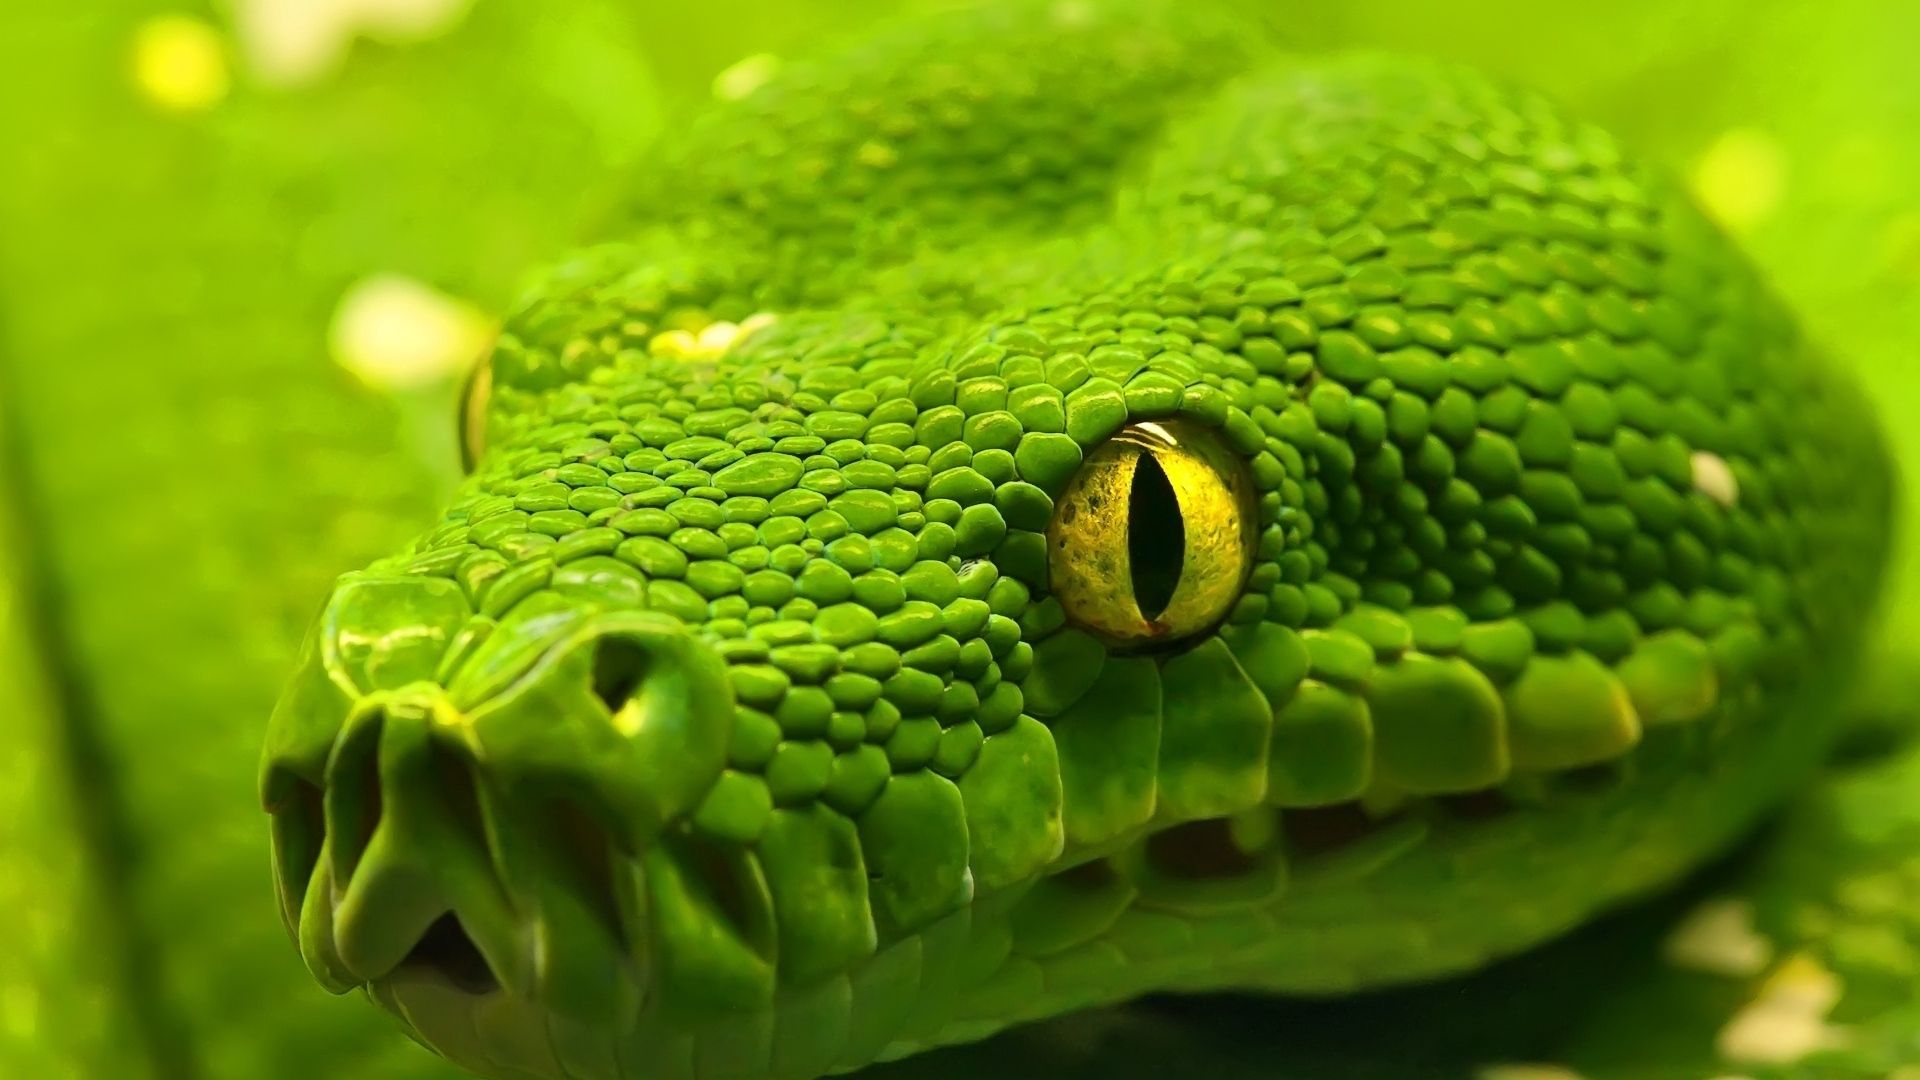 Green Snake Eyes